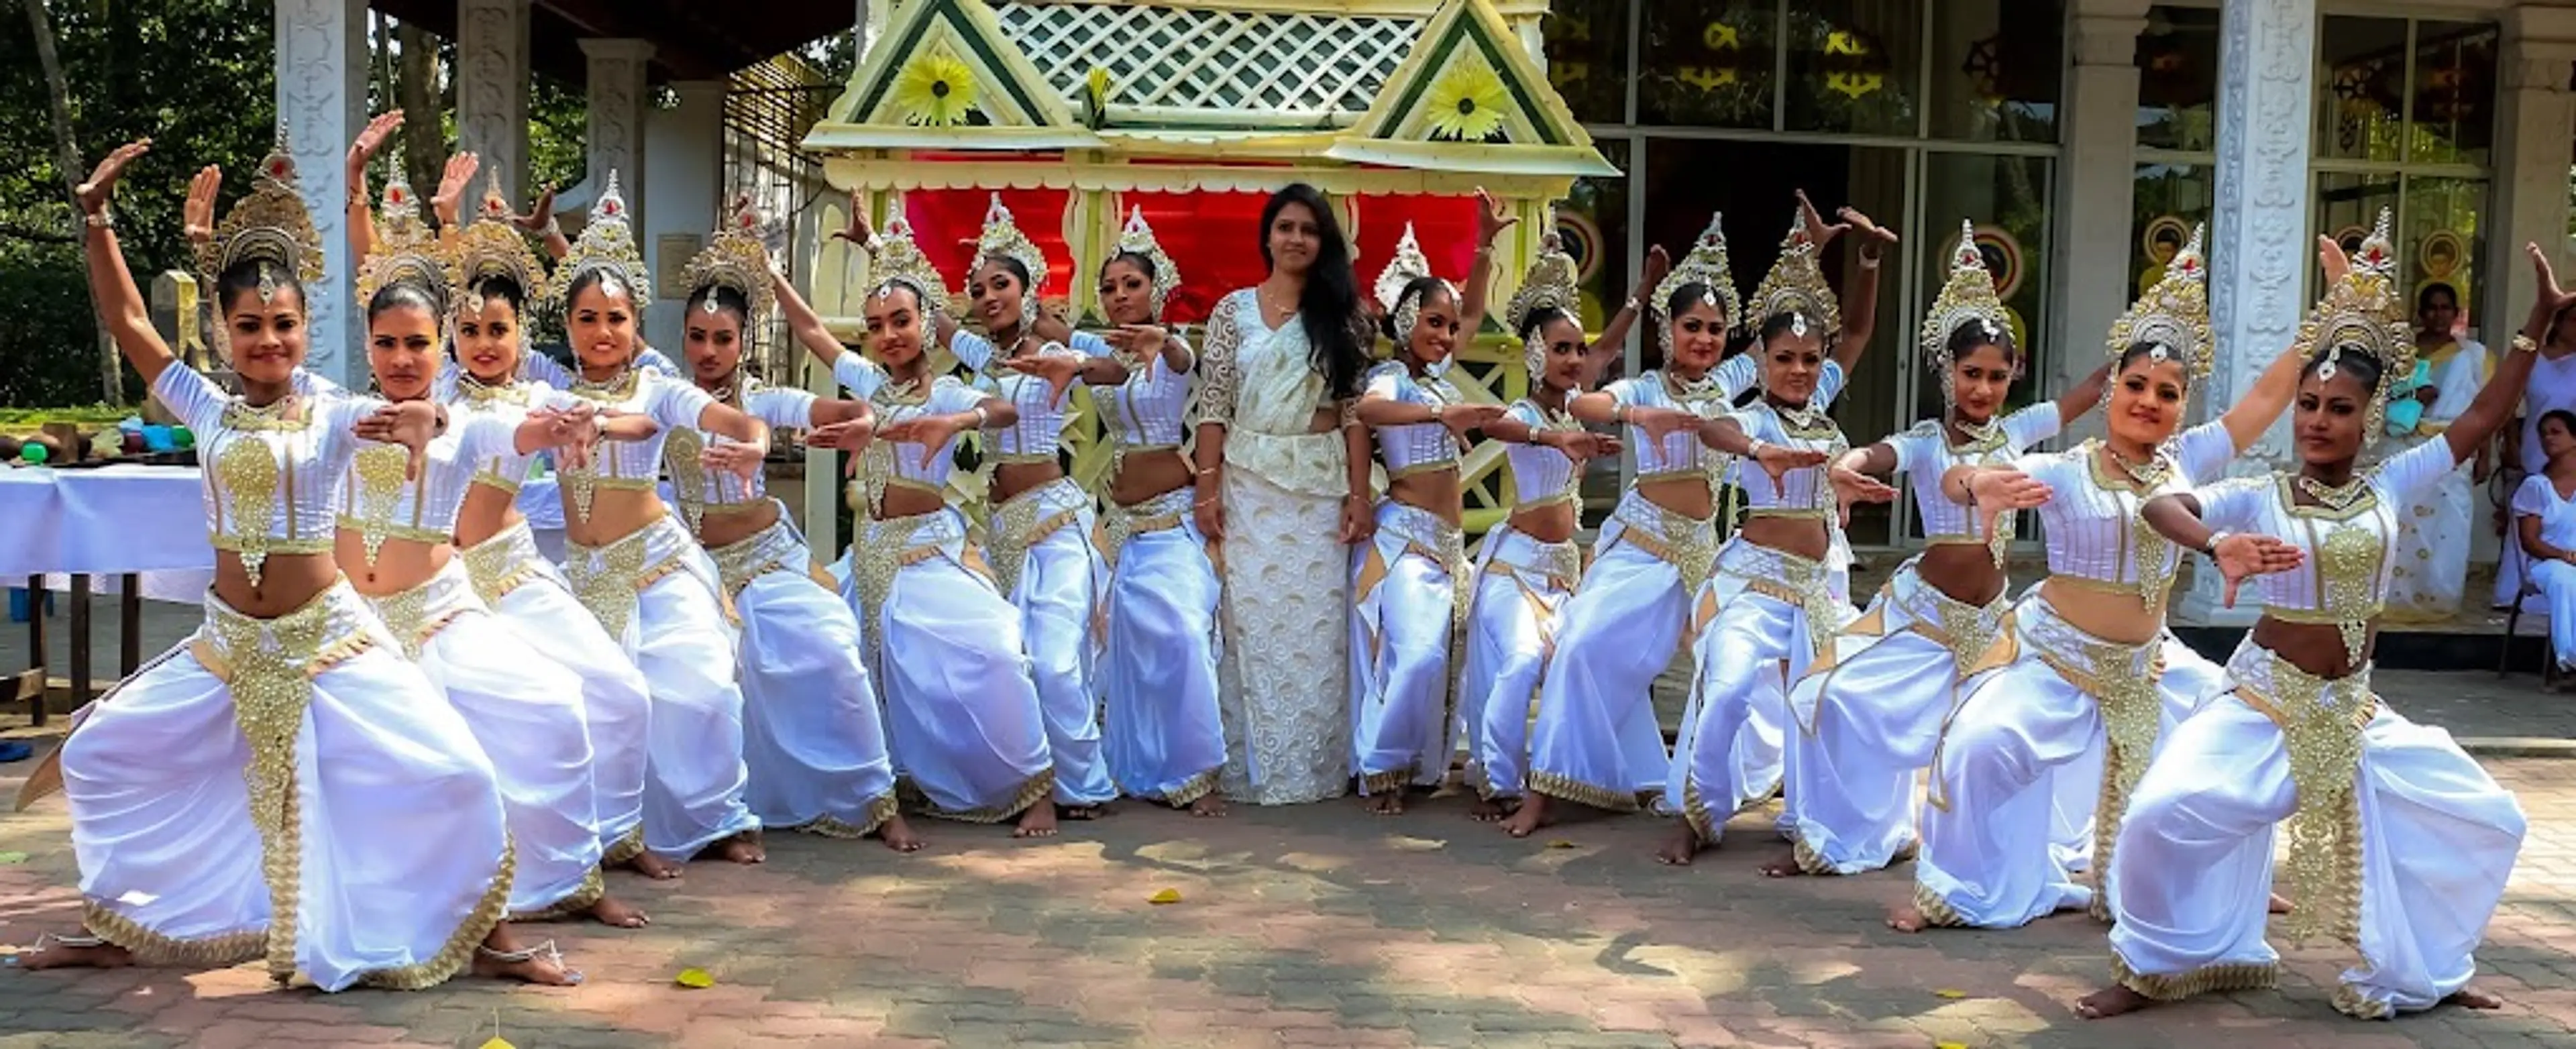 Traditional Sri Lankan dance performance